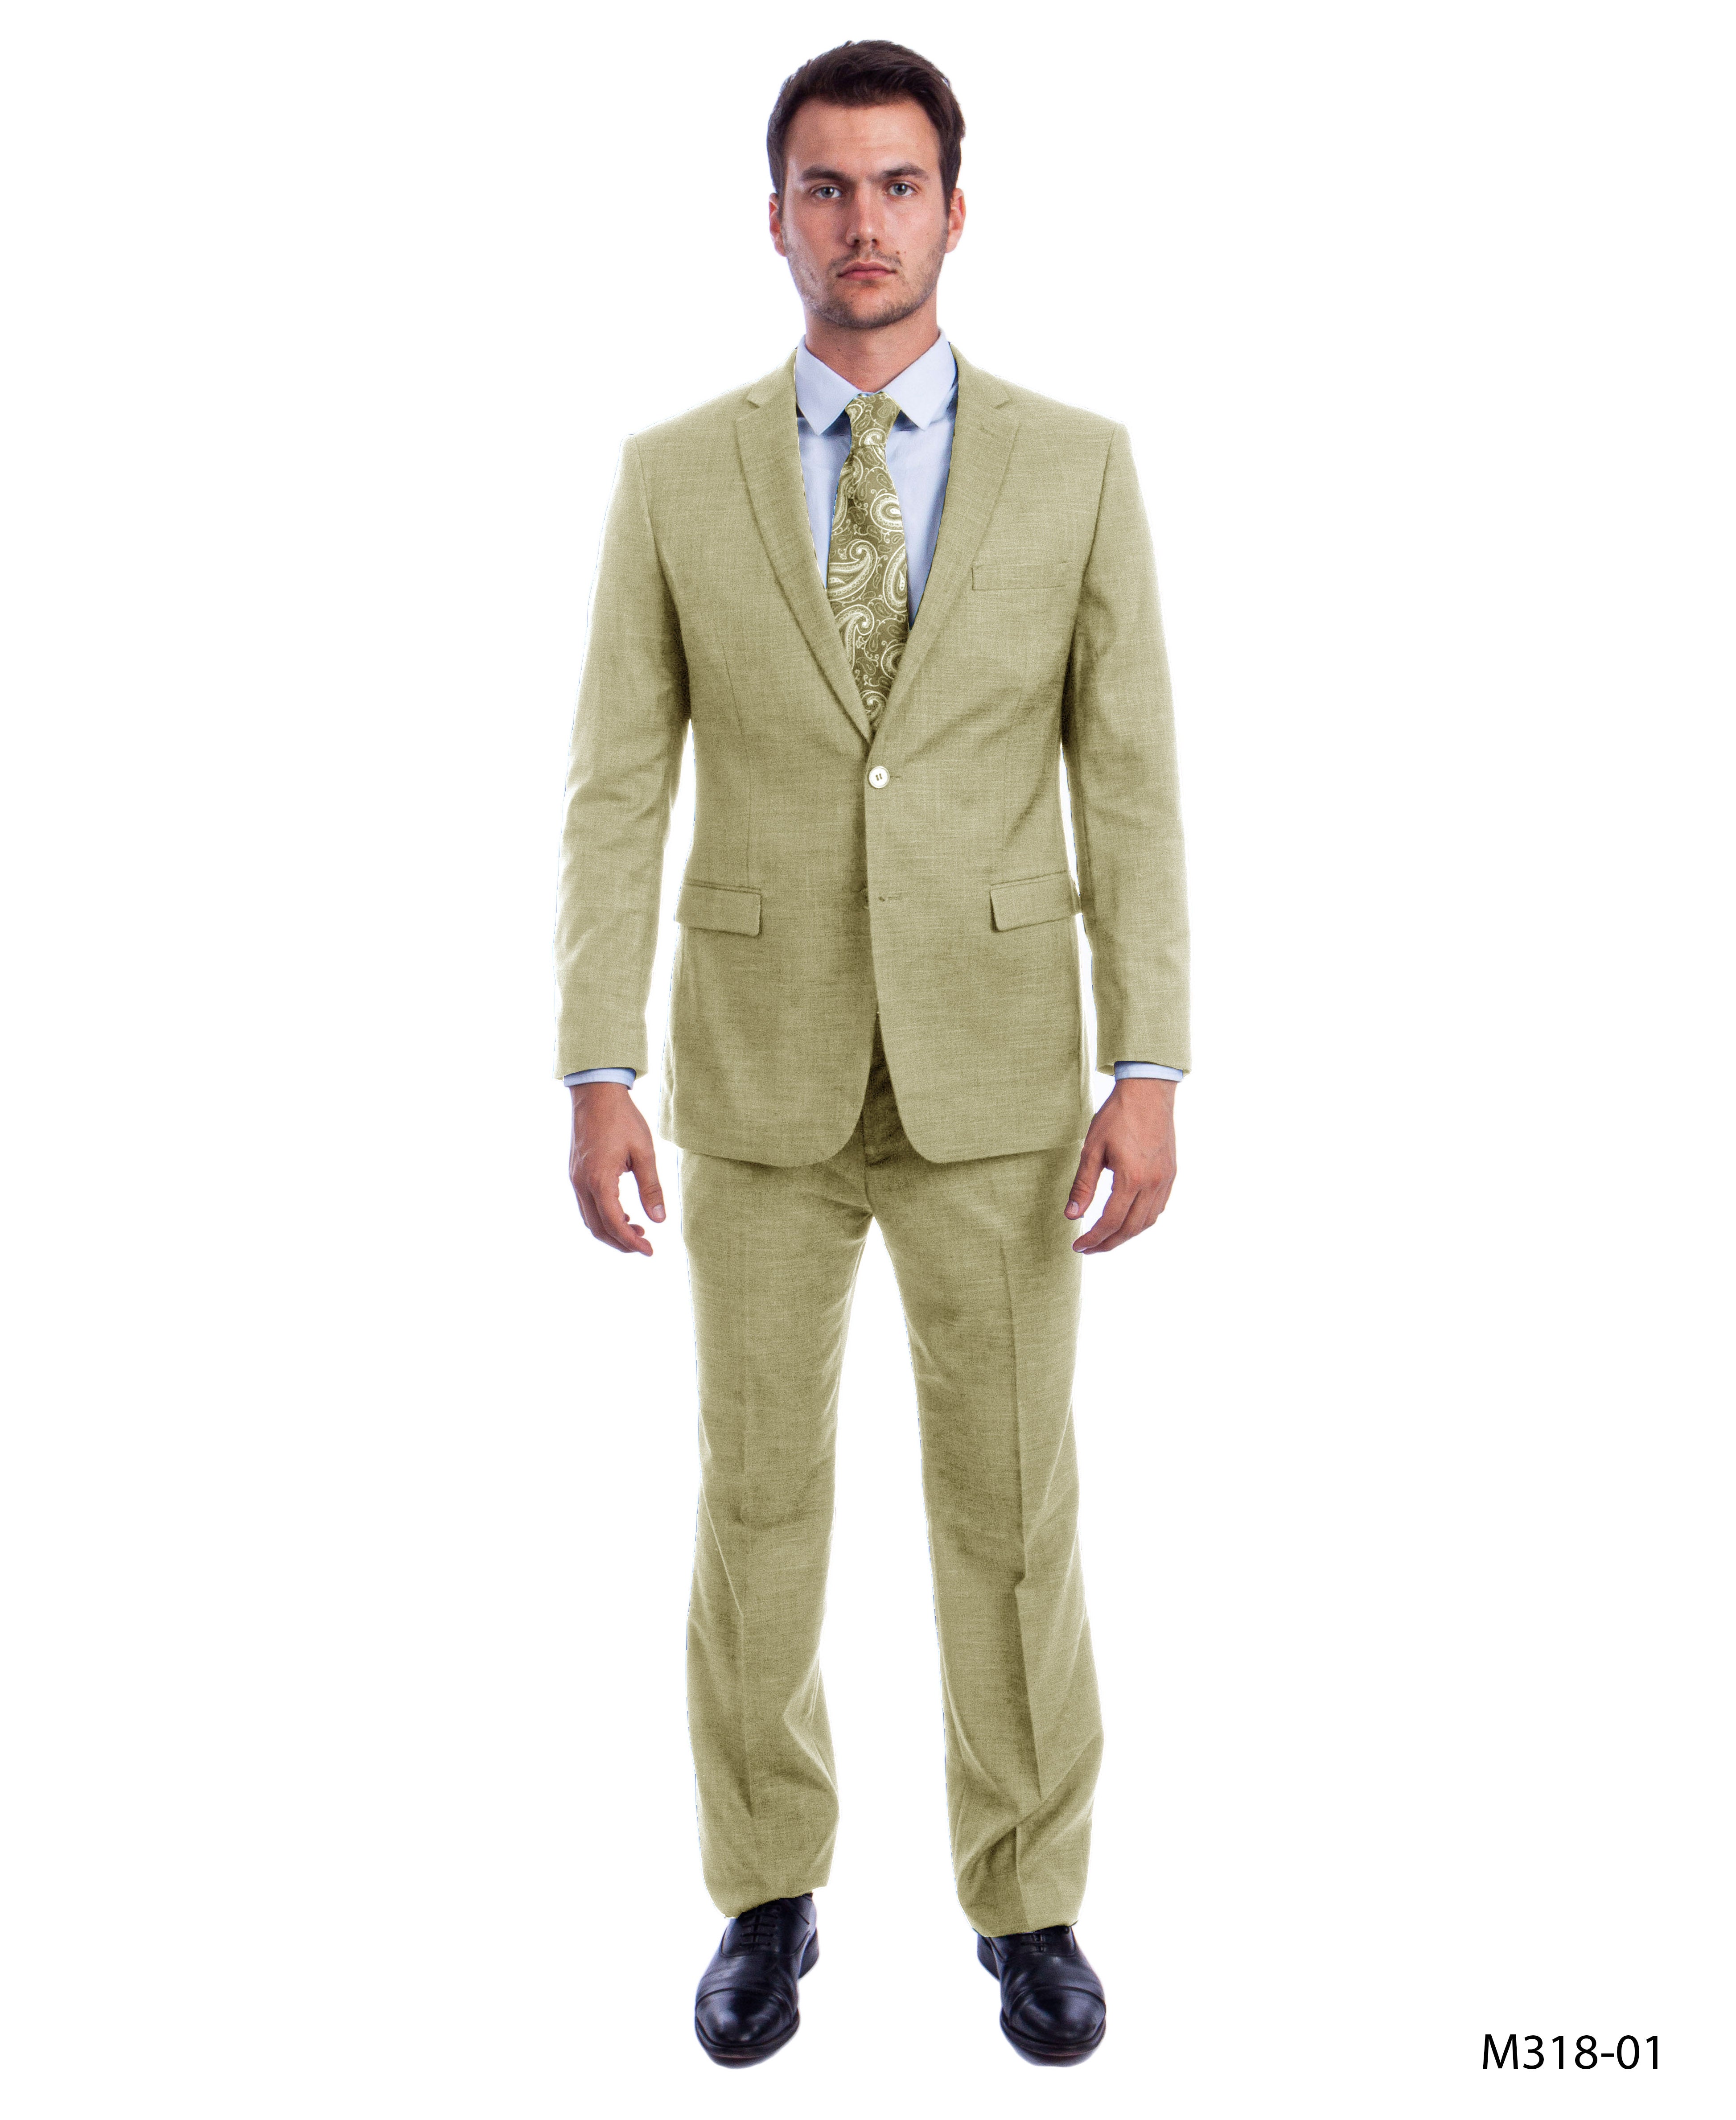 Lt.Beige Suit For Men Formal Suits For All Ocassions